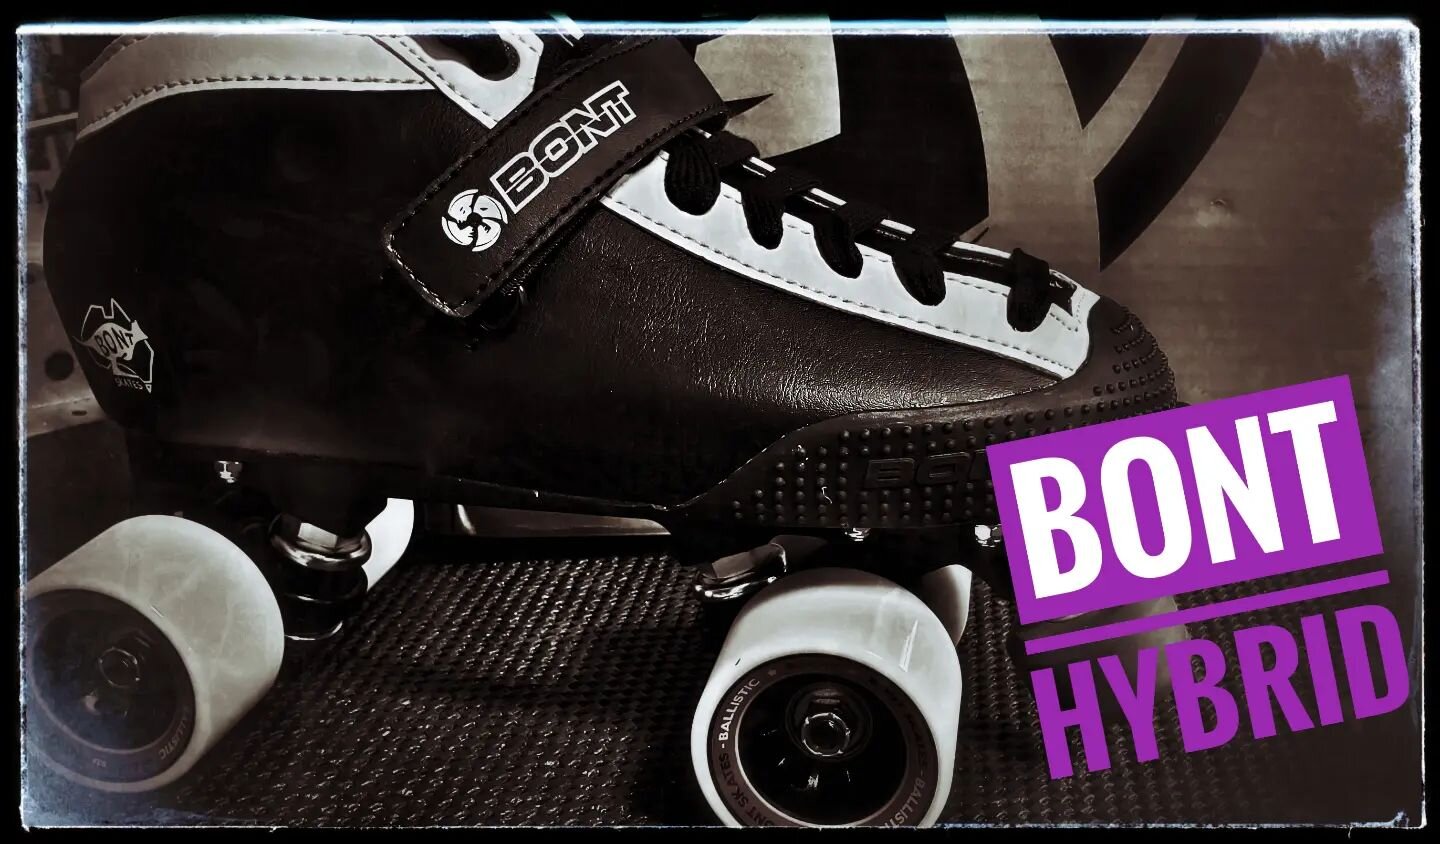 In stock now! The Bont hybrid is heat moldable and built to last! 

#rollerskates #bontskates #derbyempire #rollerderby #rollerskating